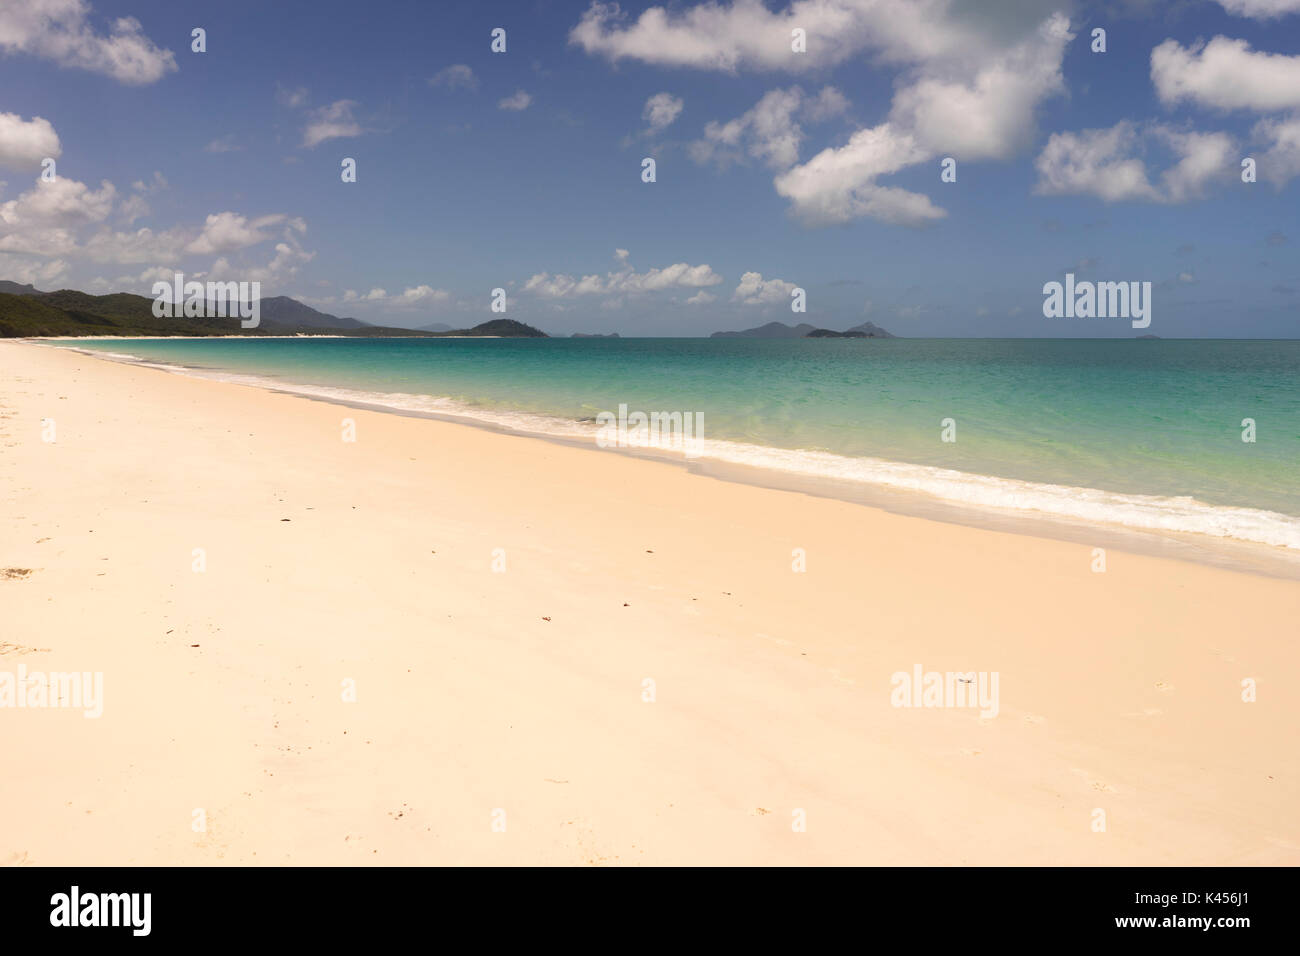 Idyllic beach in Australia deserted Stock Photo